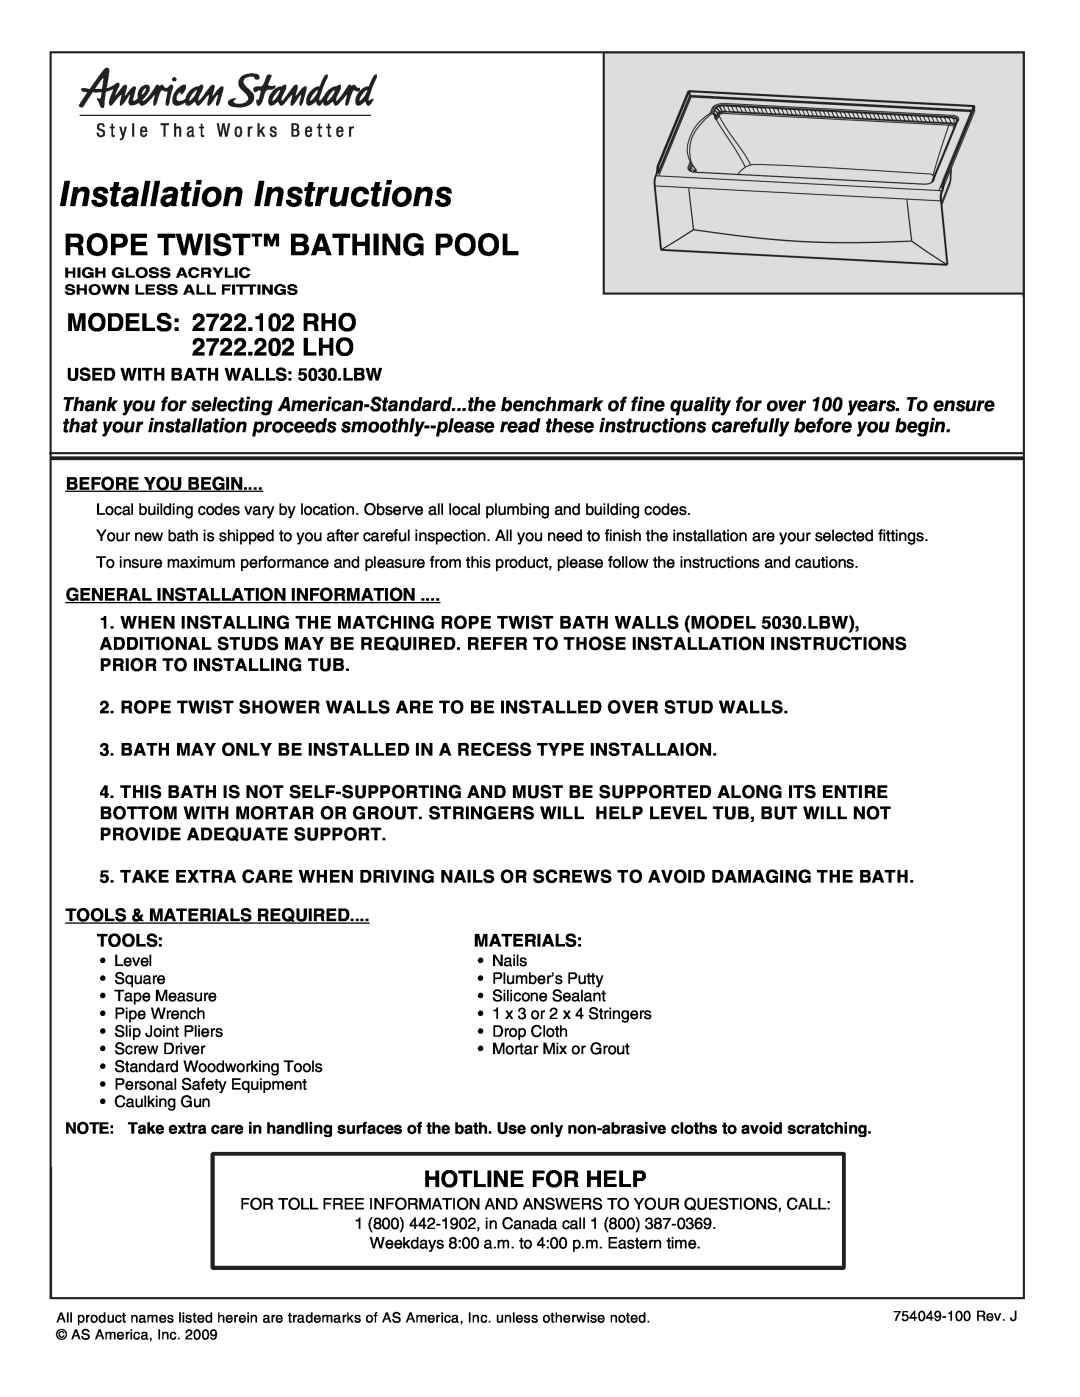 American Standard 2722.102 LHO installation instructions Hotline For Help, Rope Twist Bathing Pool, MODELS 2722.102 RHO 